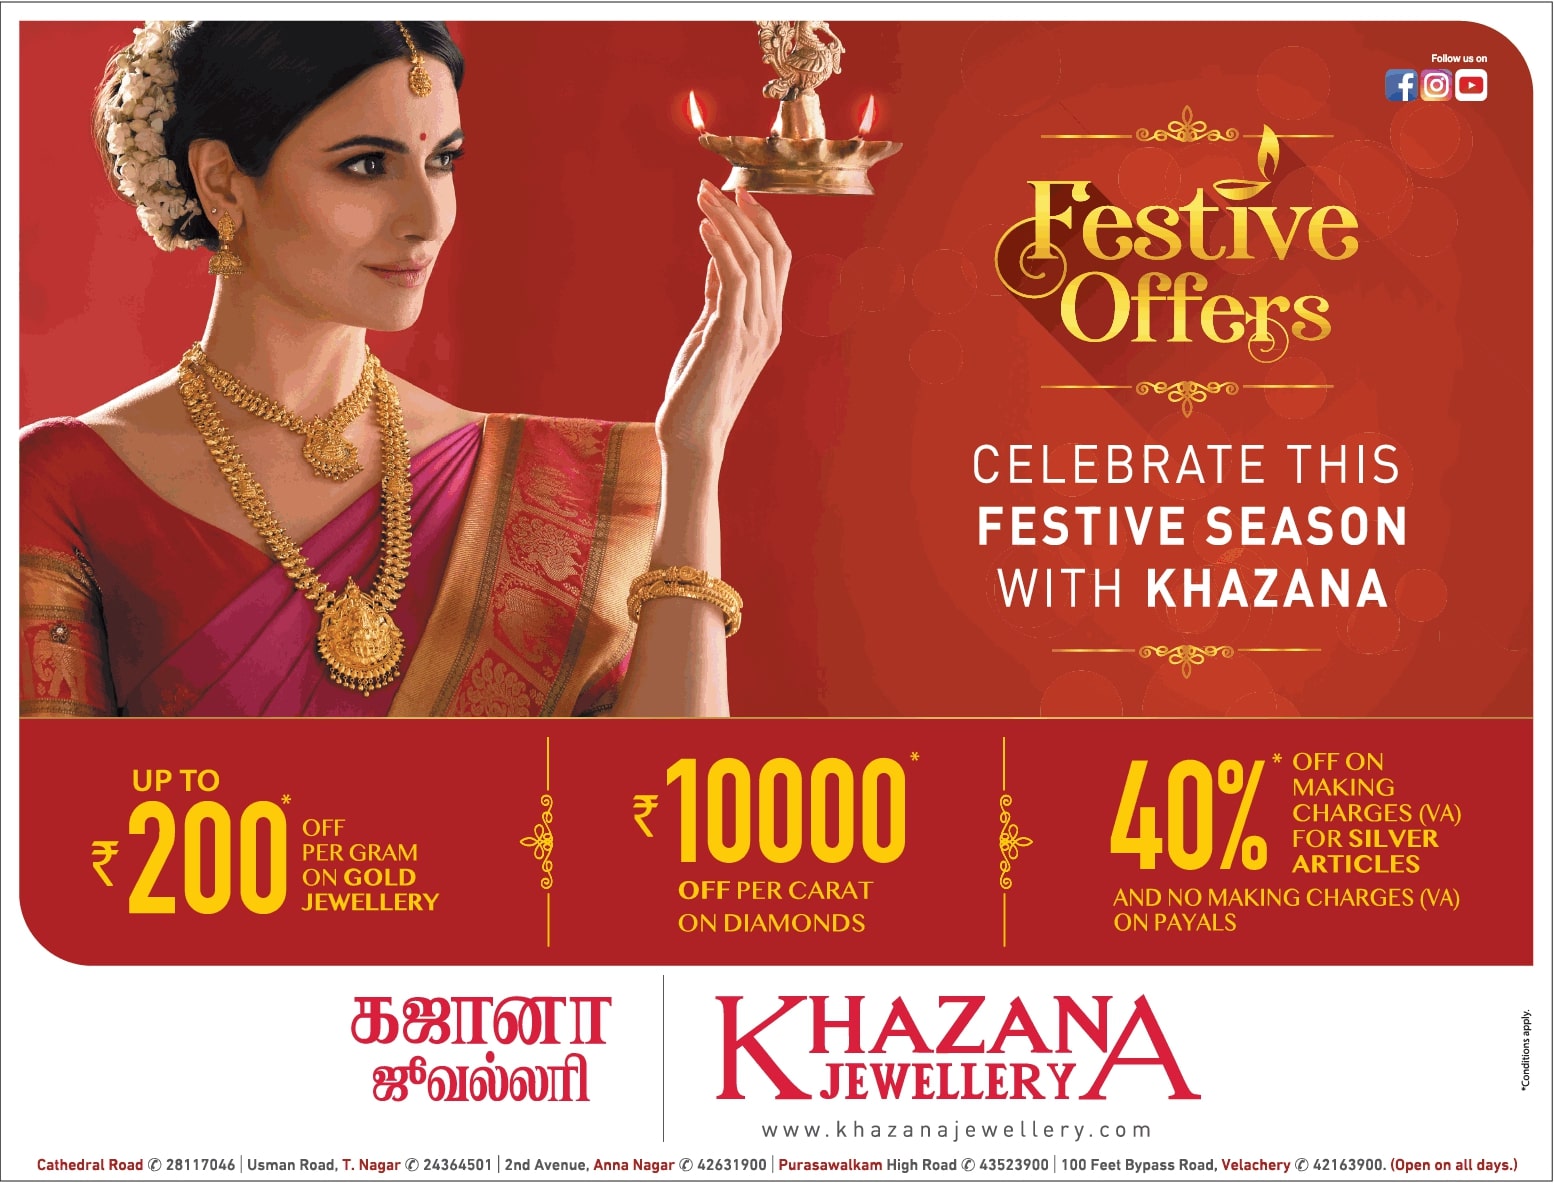 khazana-jewellers-celebrate-this-festive-season-with-khazana-ad-toi-chennai-13-11-2020